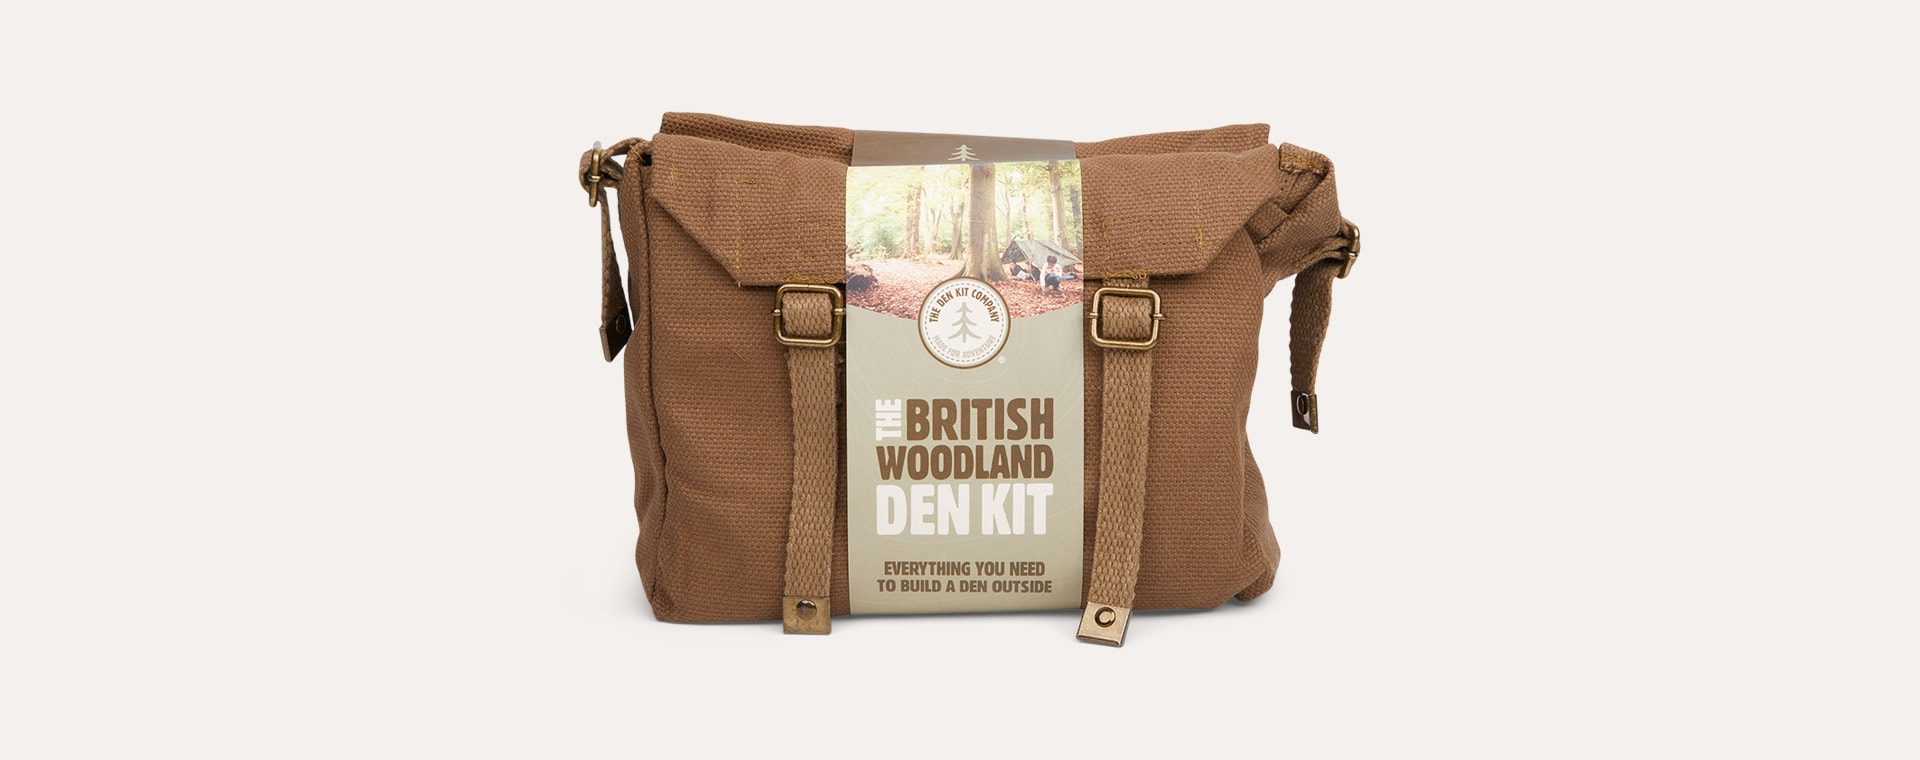 Multi The Den Kit Company The British Woodland Den Kit